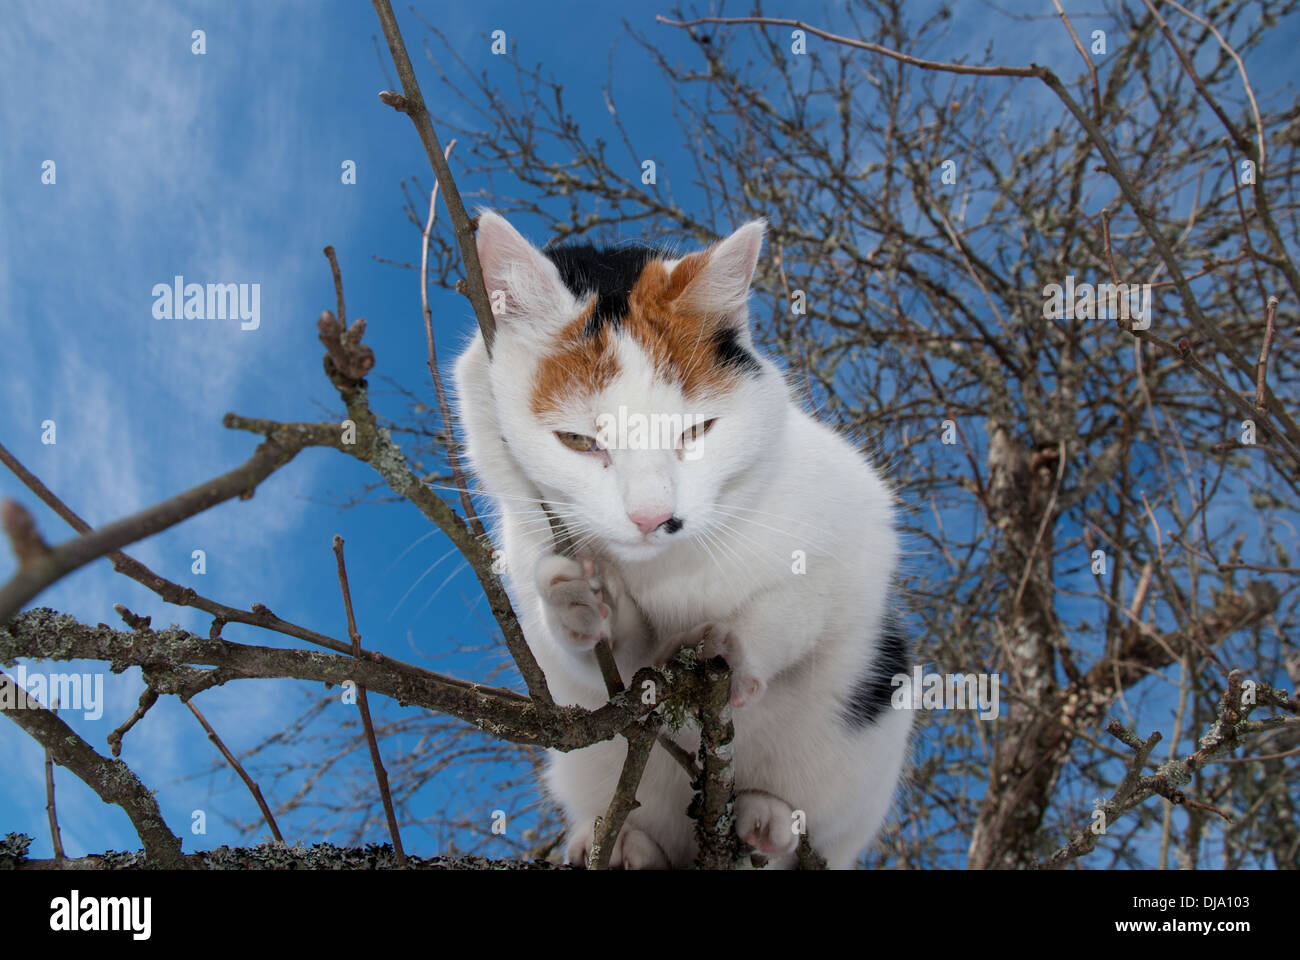 Cat climbing in a tree Stock Photo